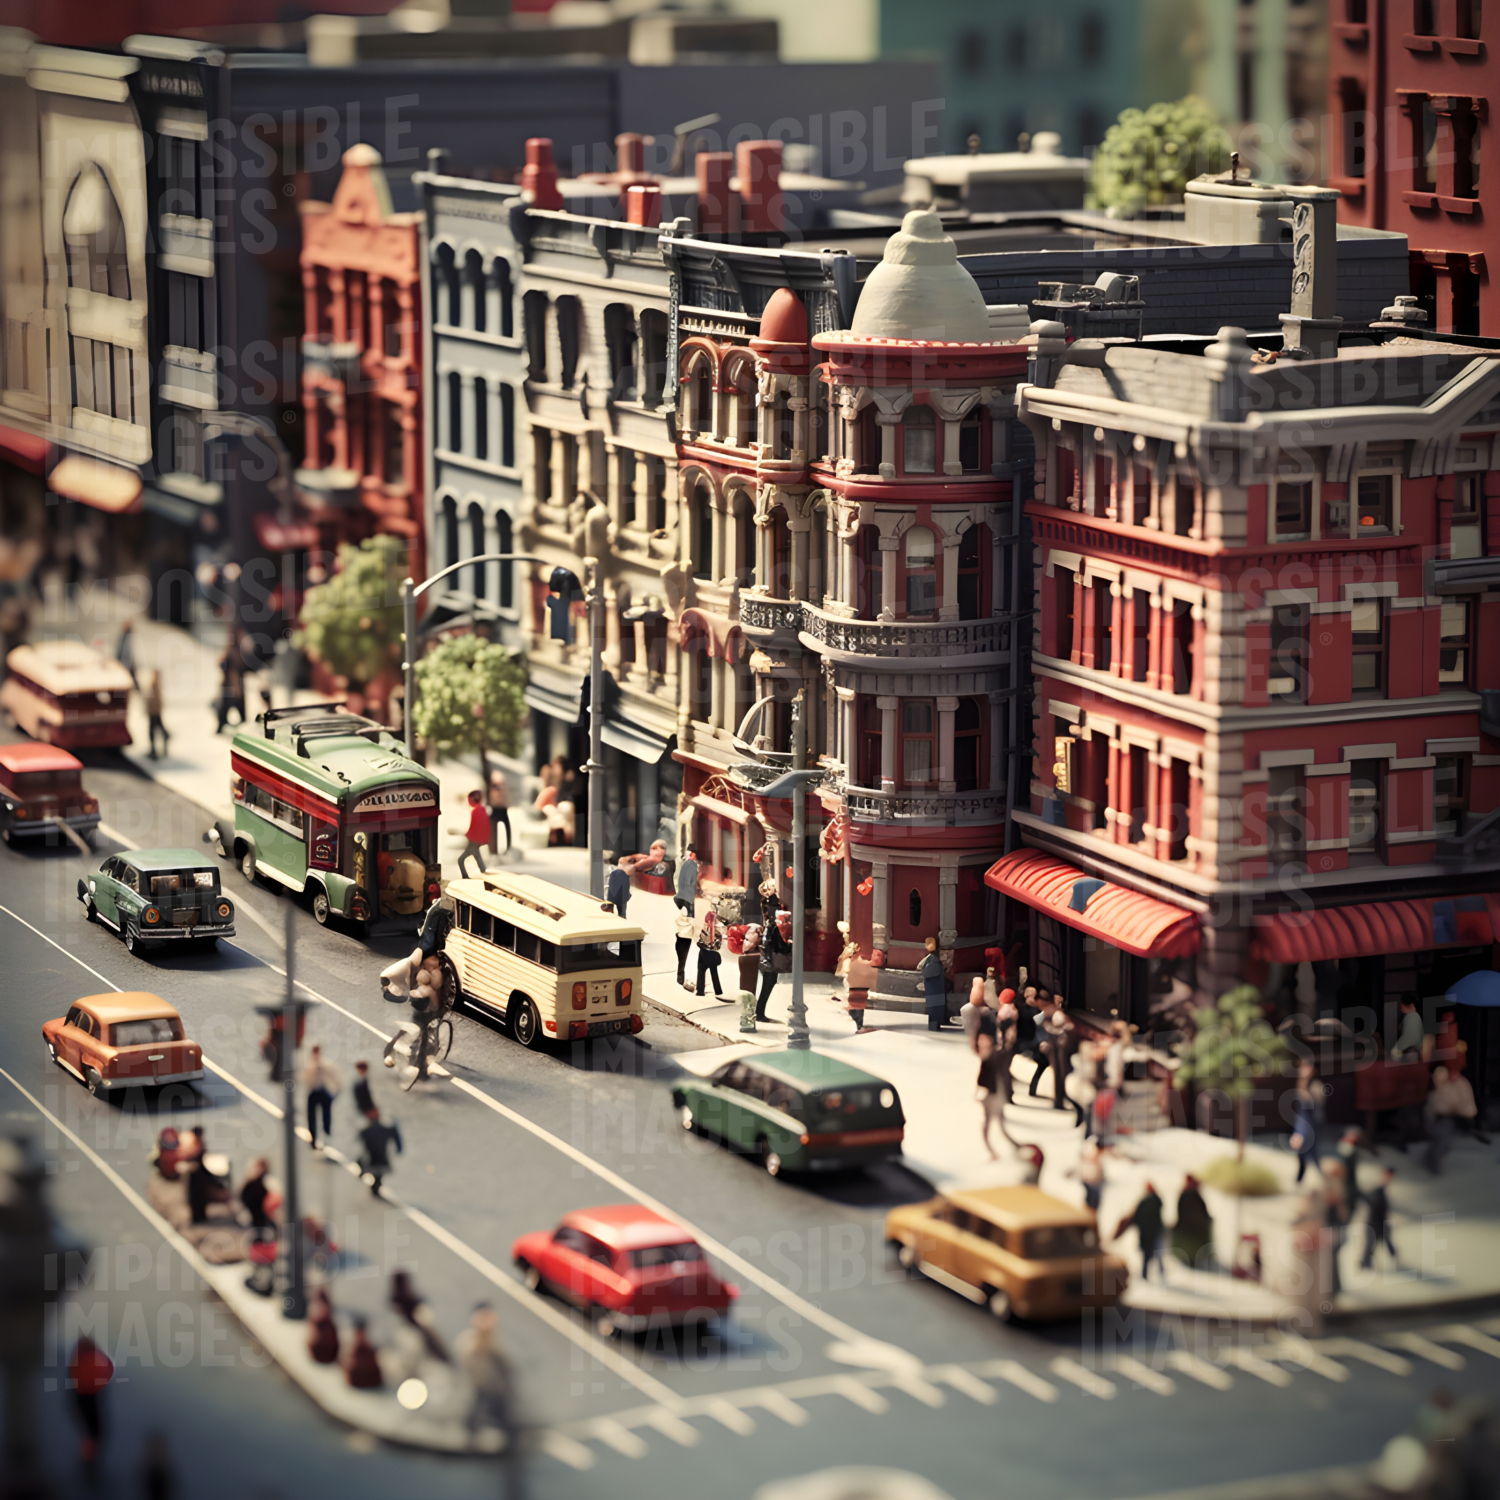 Model of a busy mid twentieth century city street corner